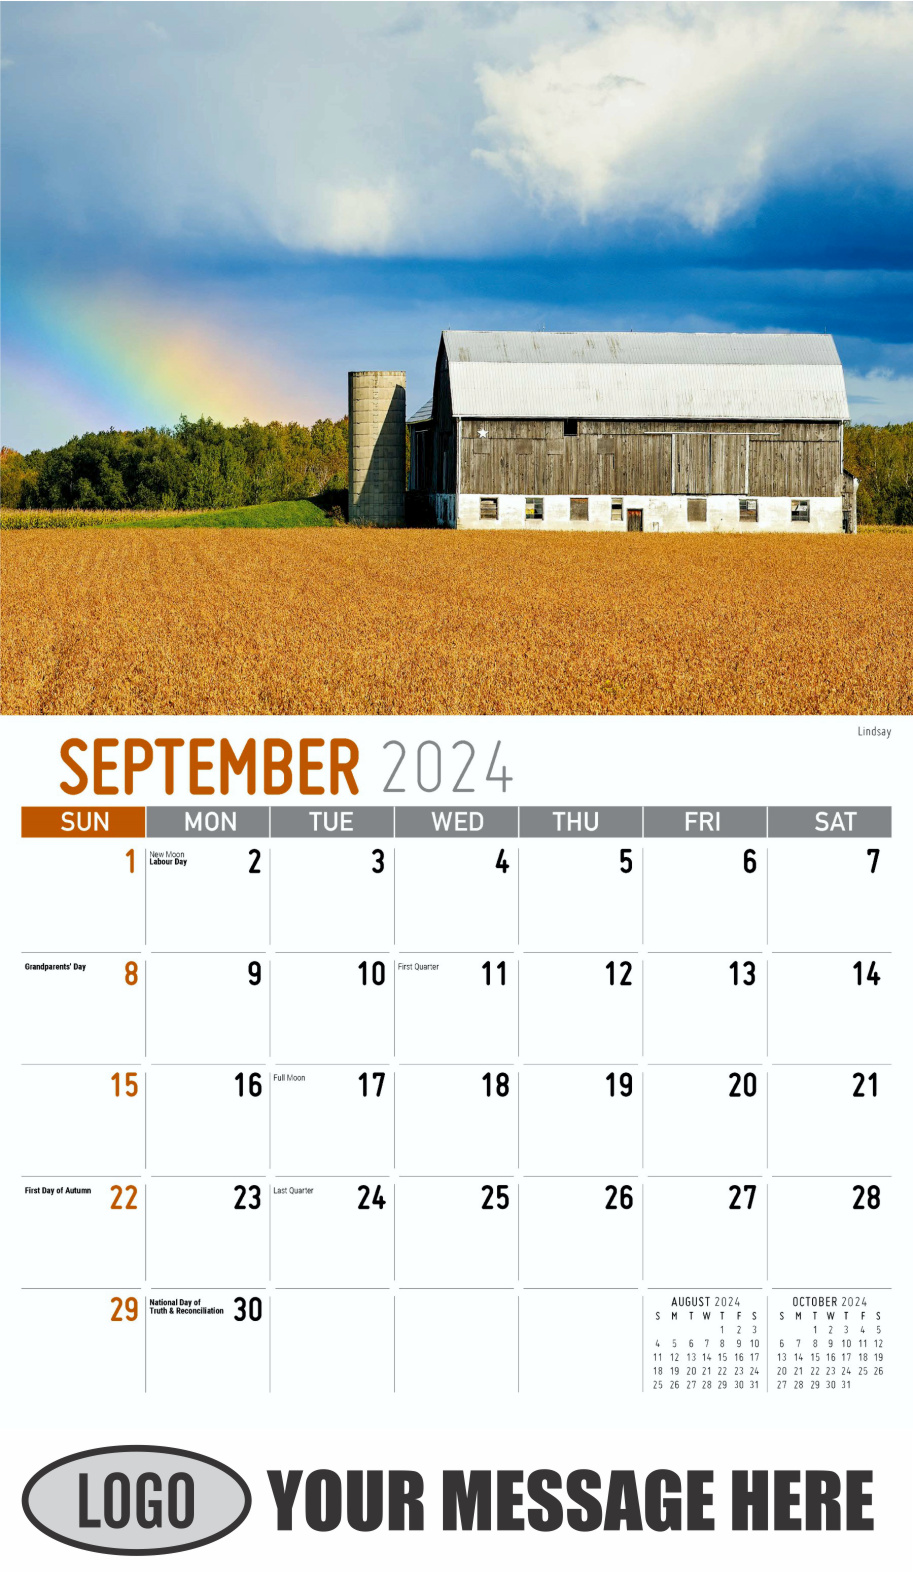 Scenes of Ontario 2024 Business Promo Wall Calendar - September